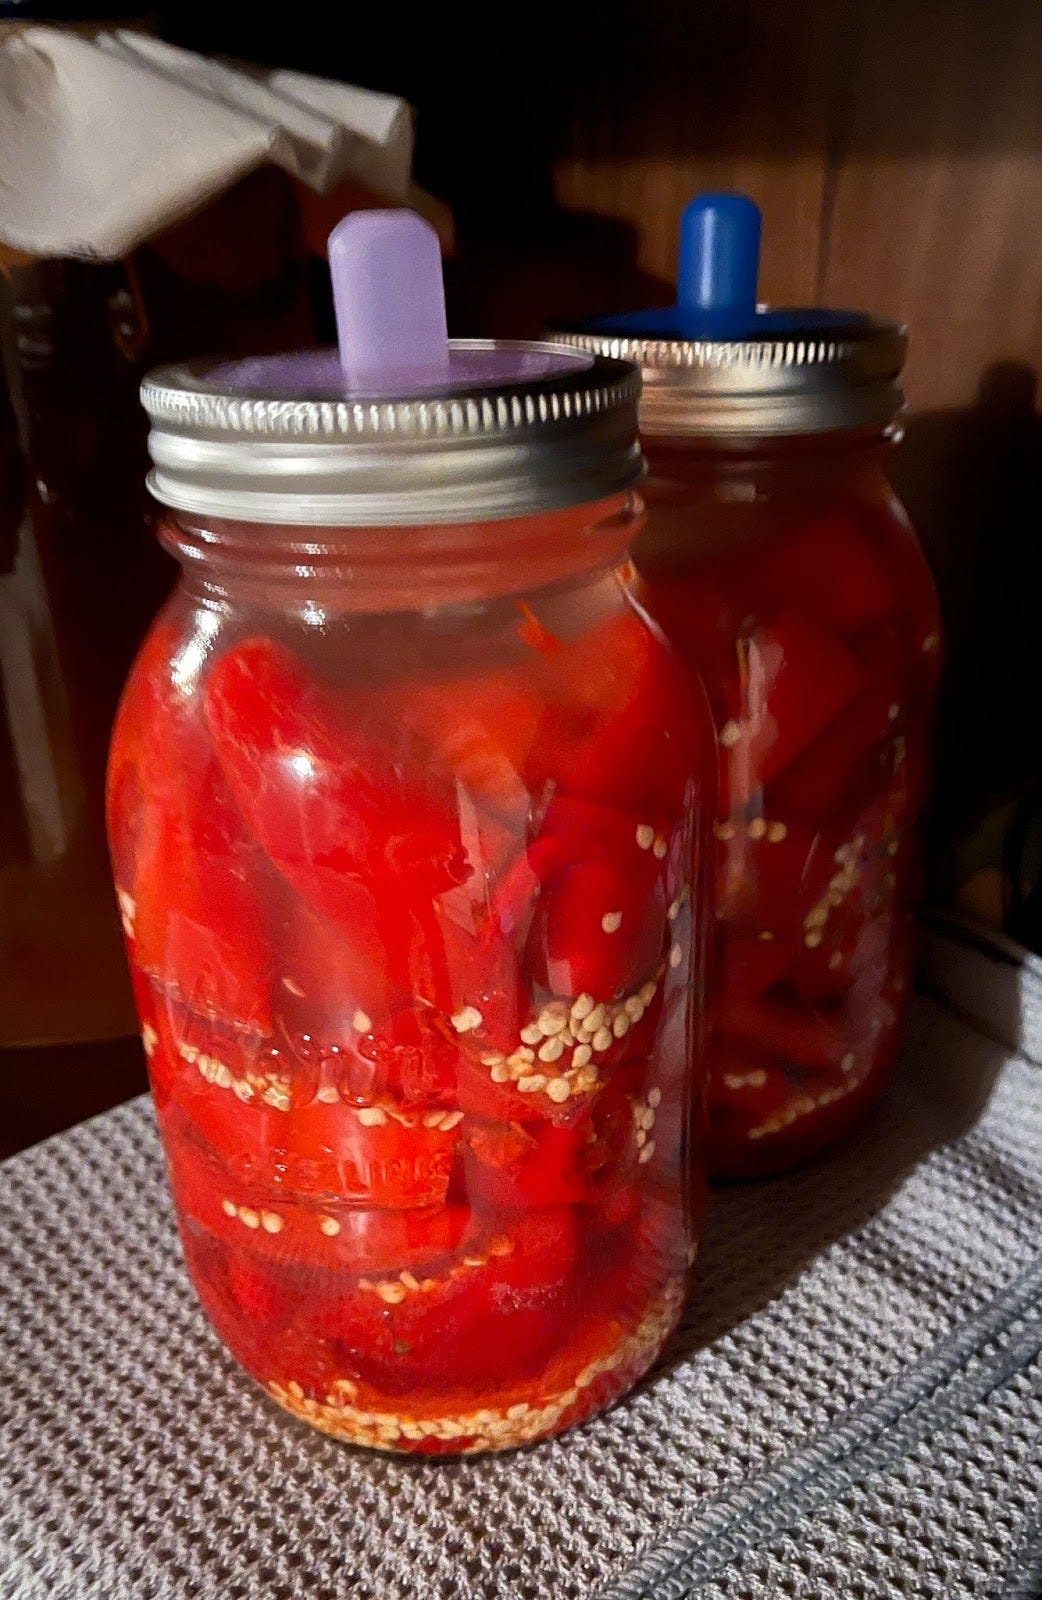 peppers fermenting in a jar